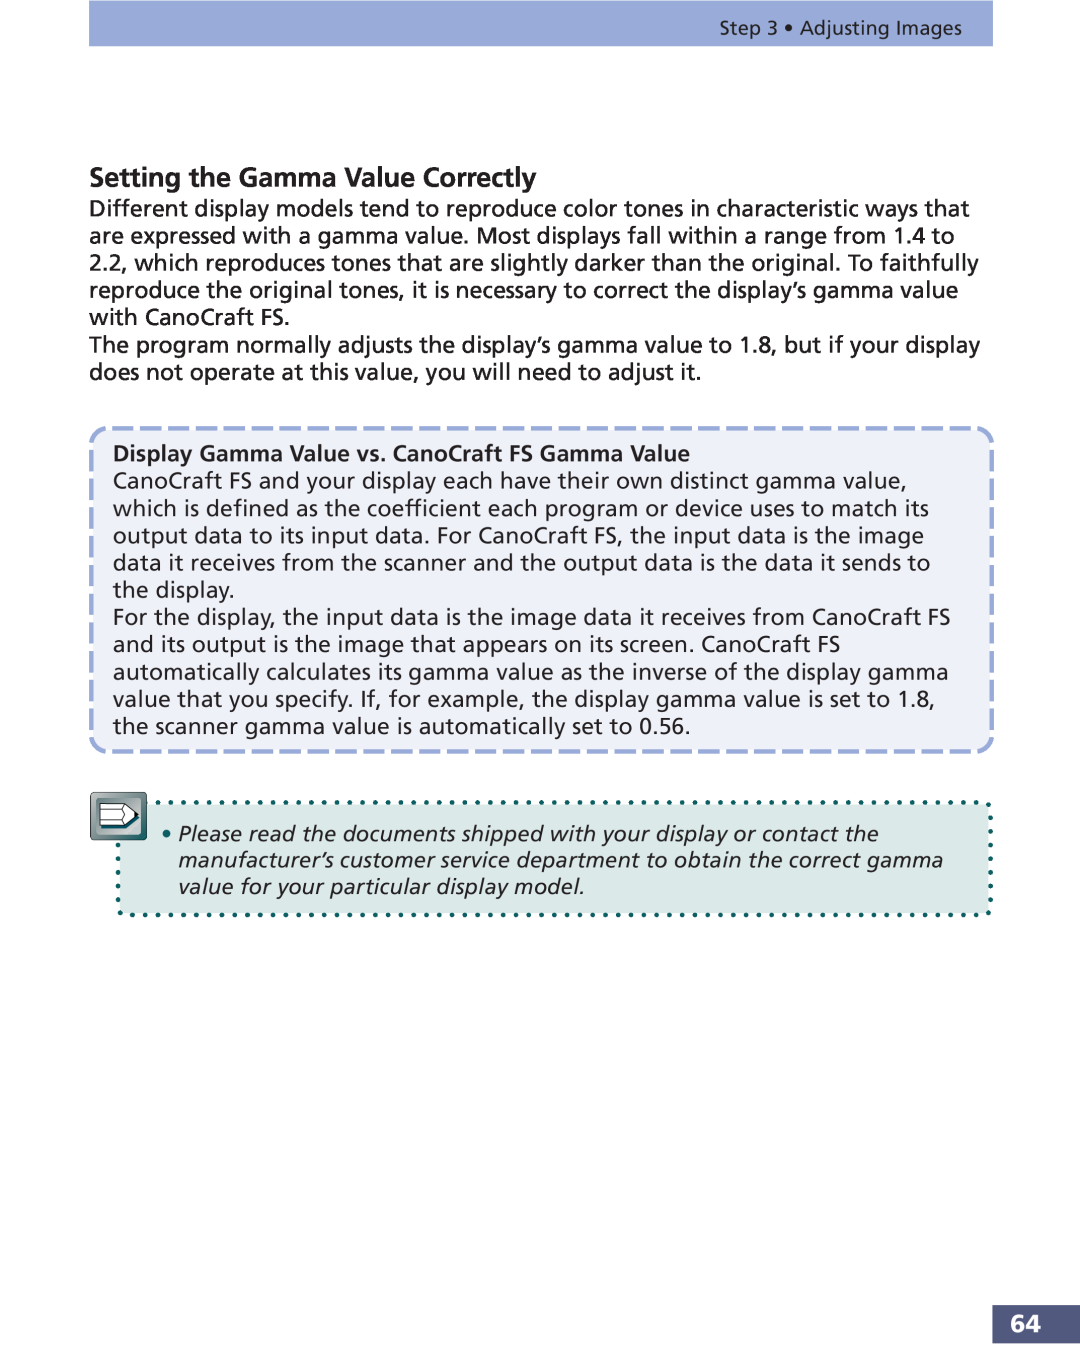 Canon FS 3.6 manual Setting the Gamma Value Correctly, Display Gamma Value vs. CanoCraft FS Gamma Value 